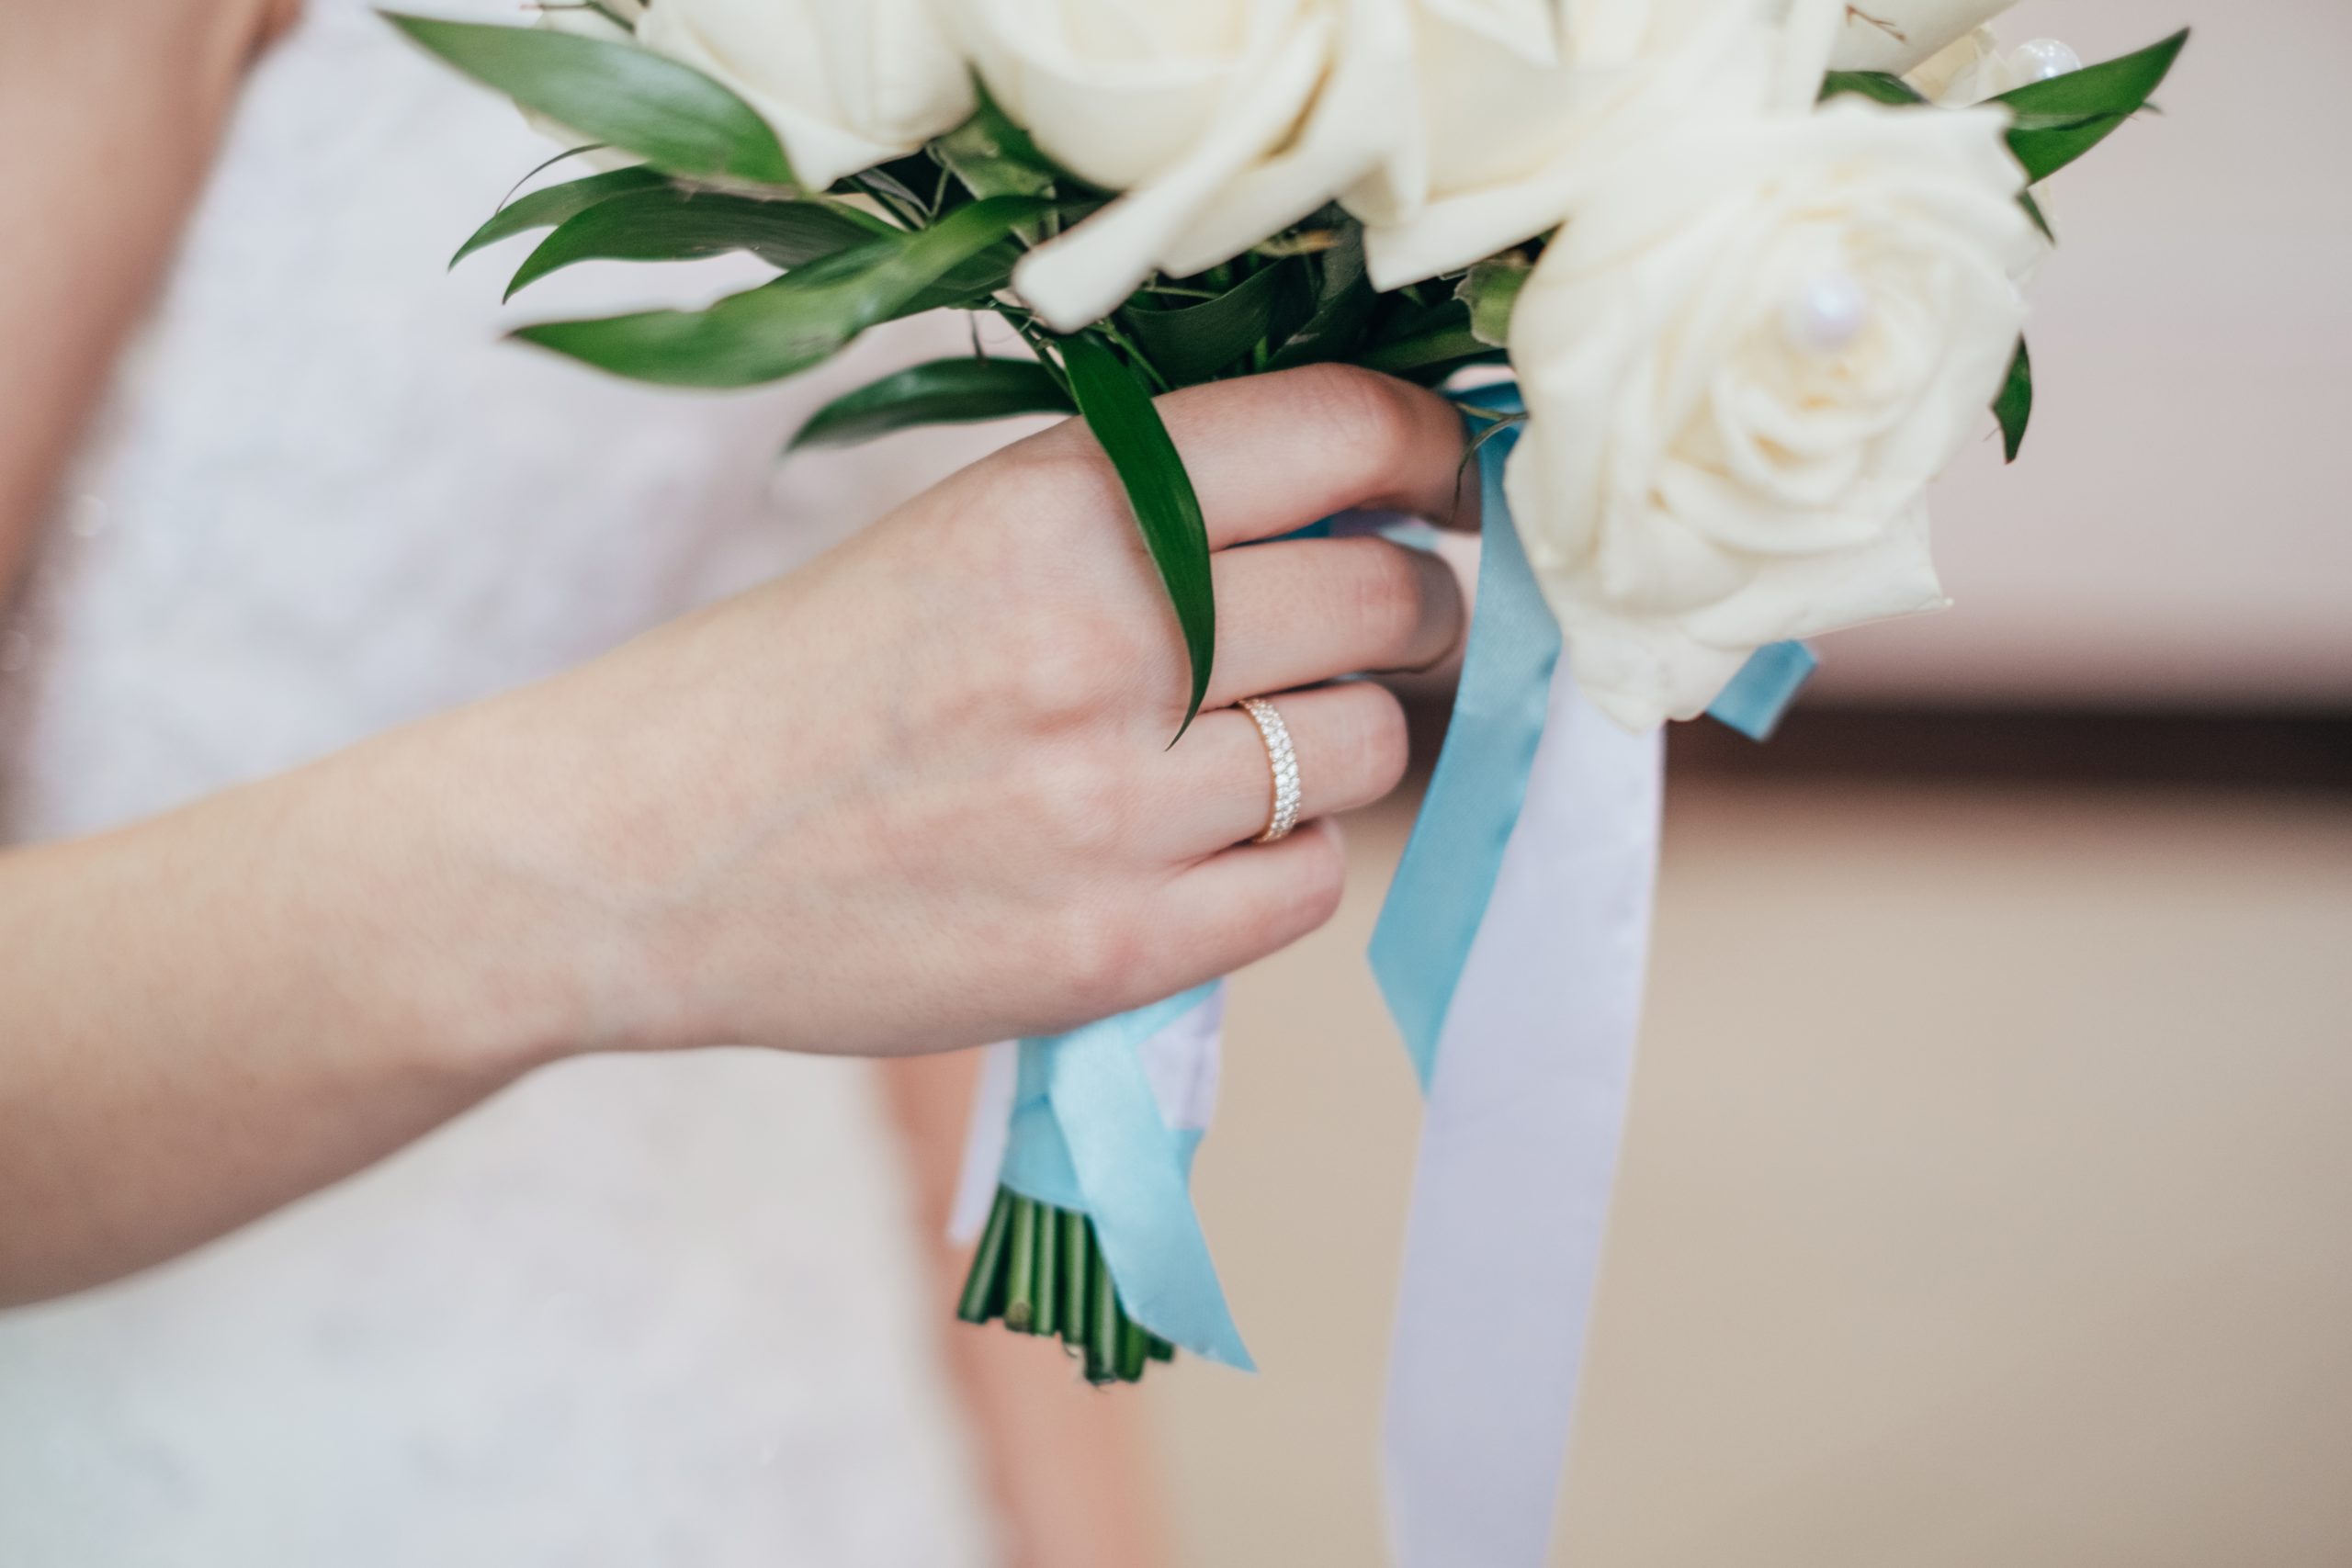 العروس-اليد-مع-خاتم-و-زفاف-bouquet_t20_yX6yy9